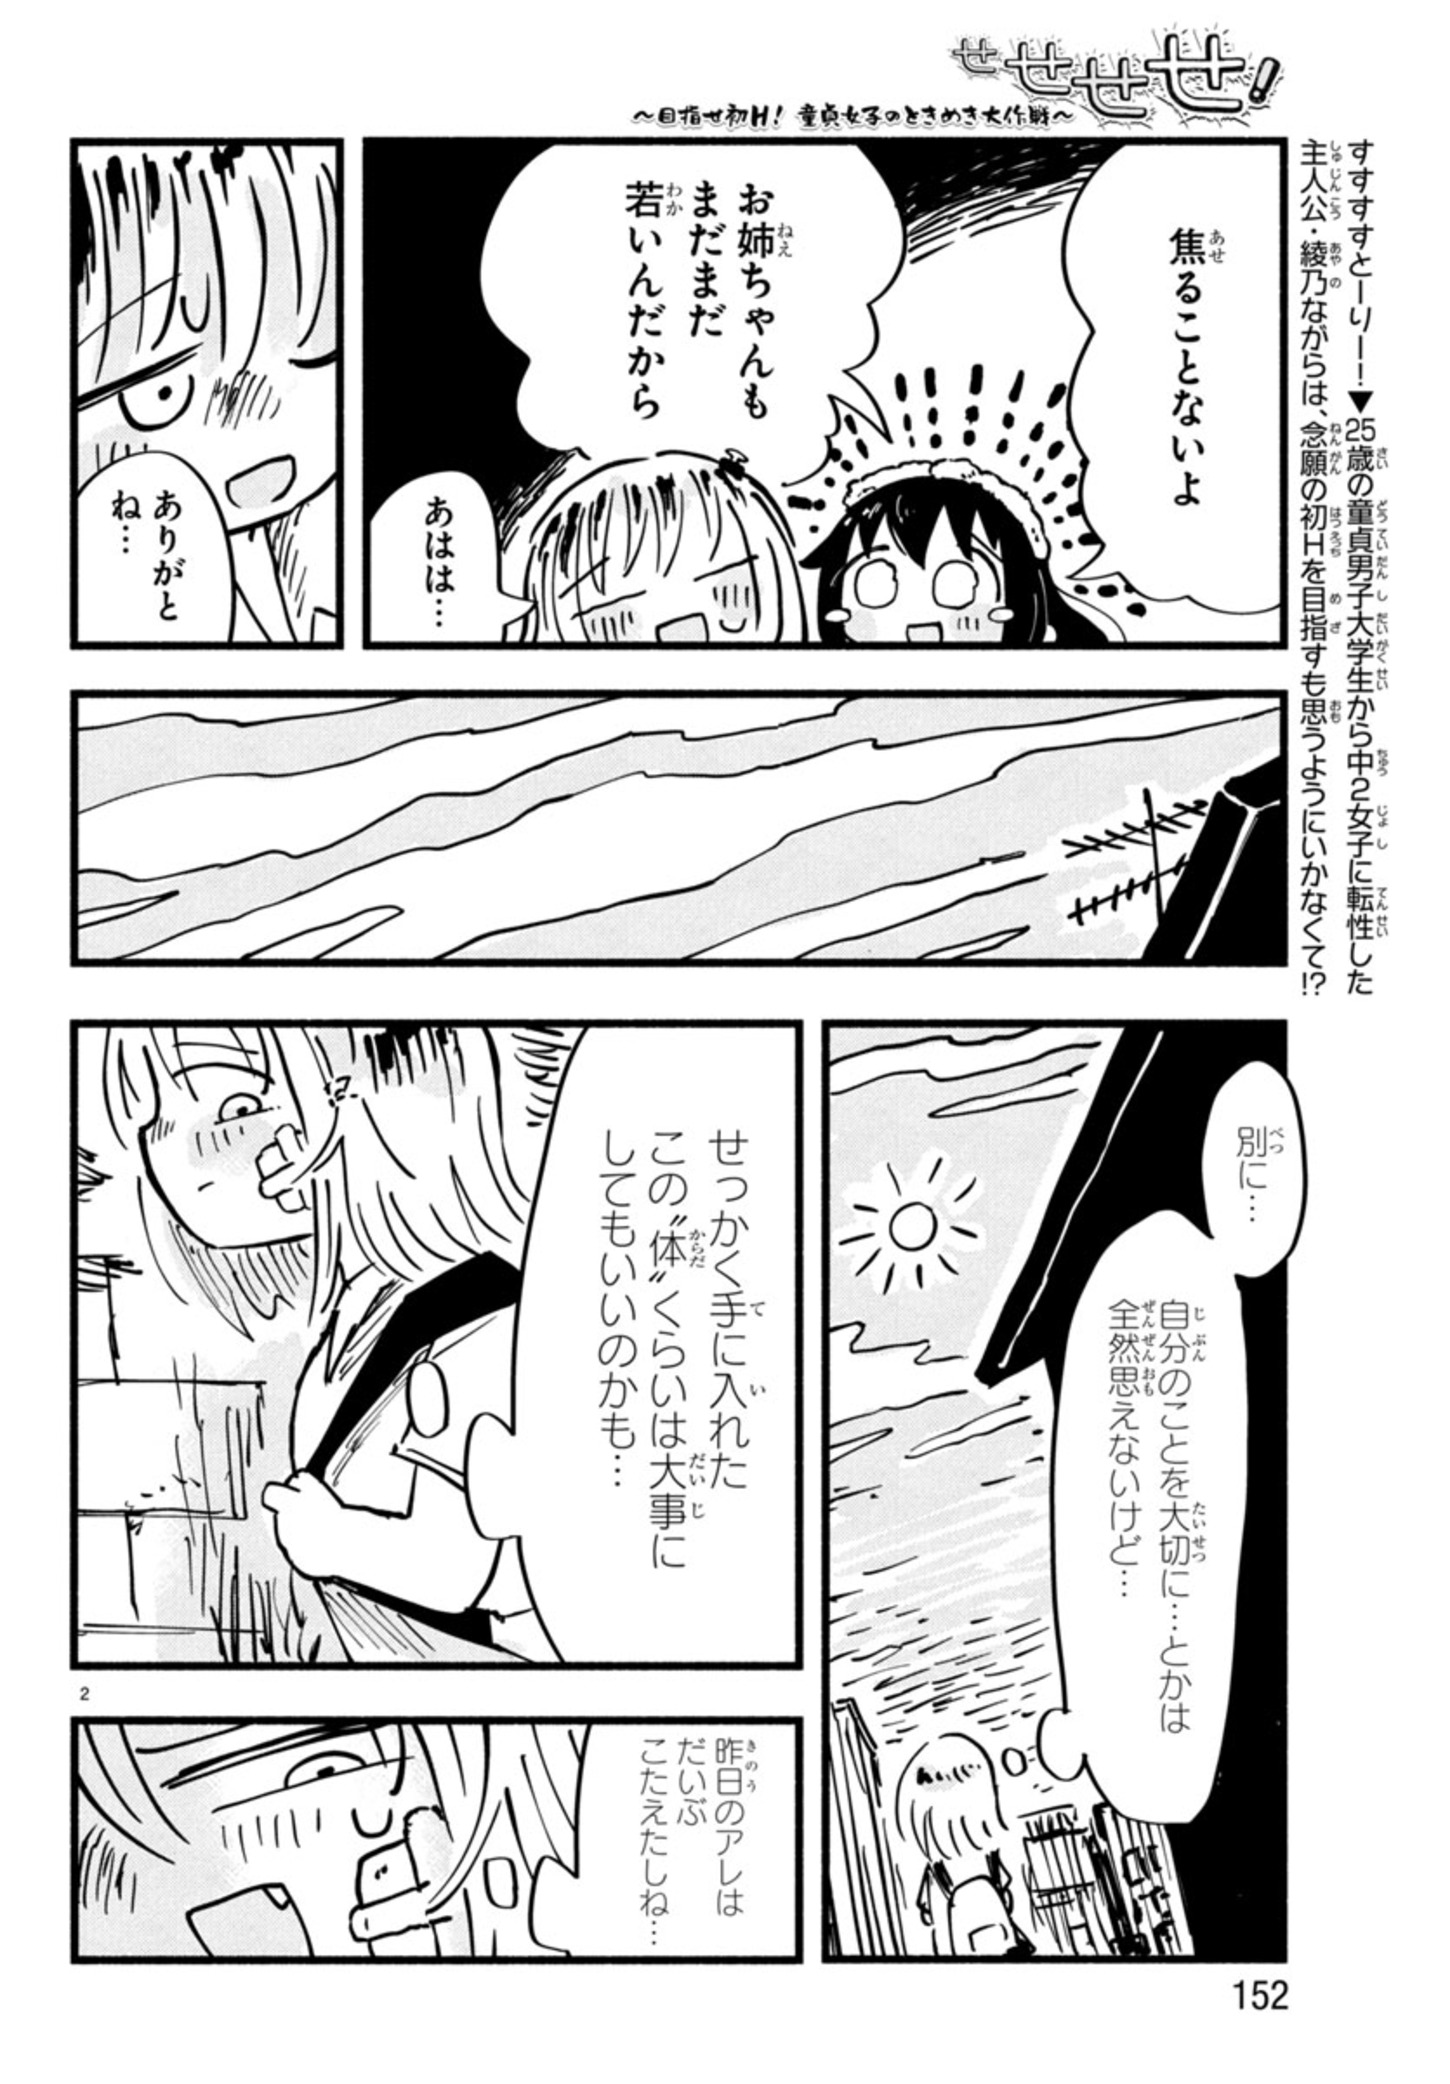 Sesesese! – Mezase Hatsu H! Doutei Joshi no Tokimeki Daisakusen - Chapter 7 - Page 2